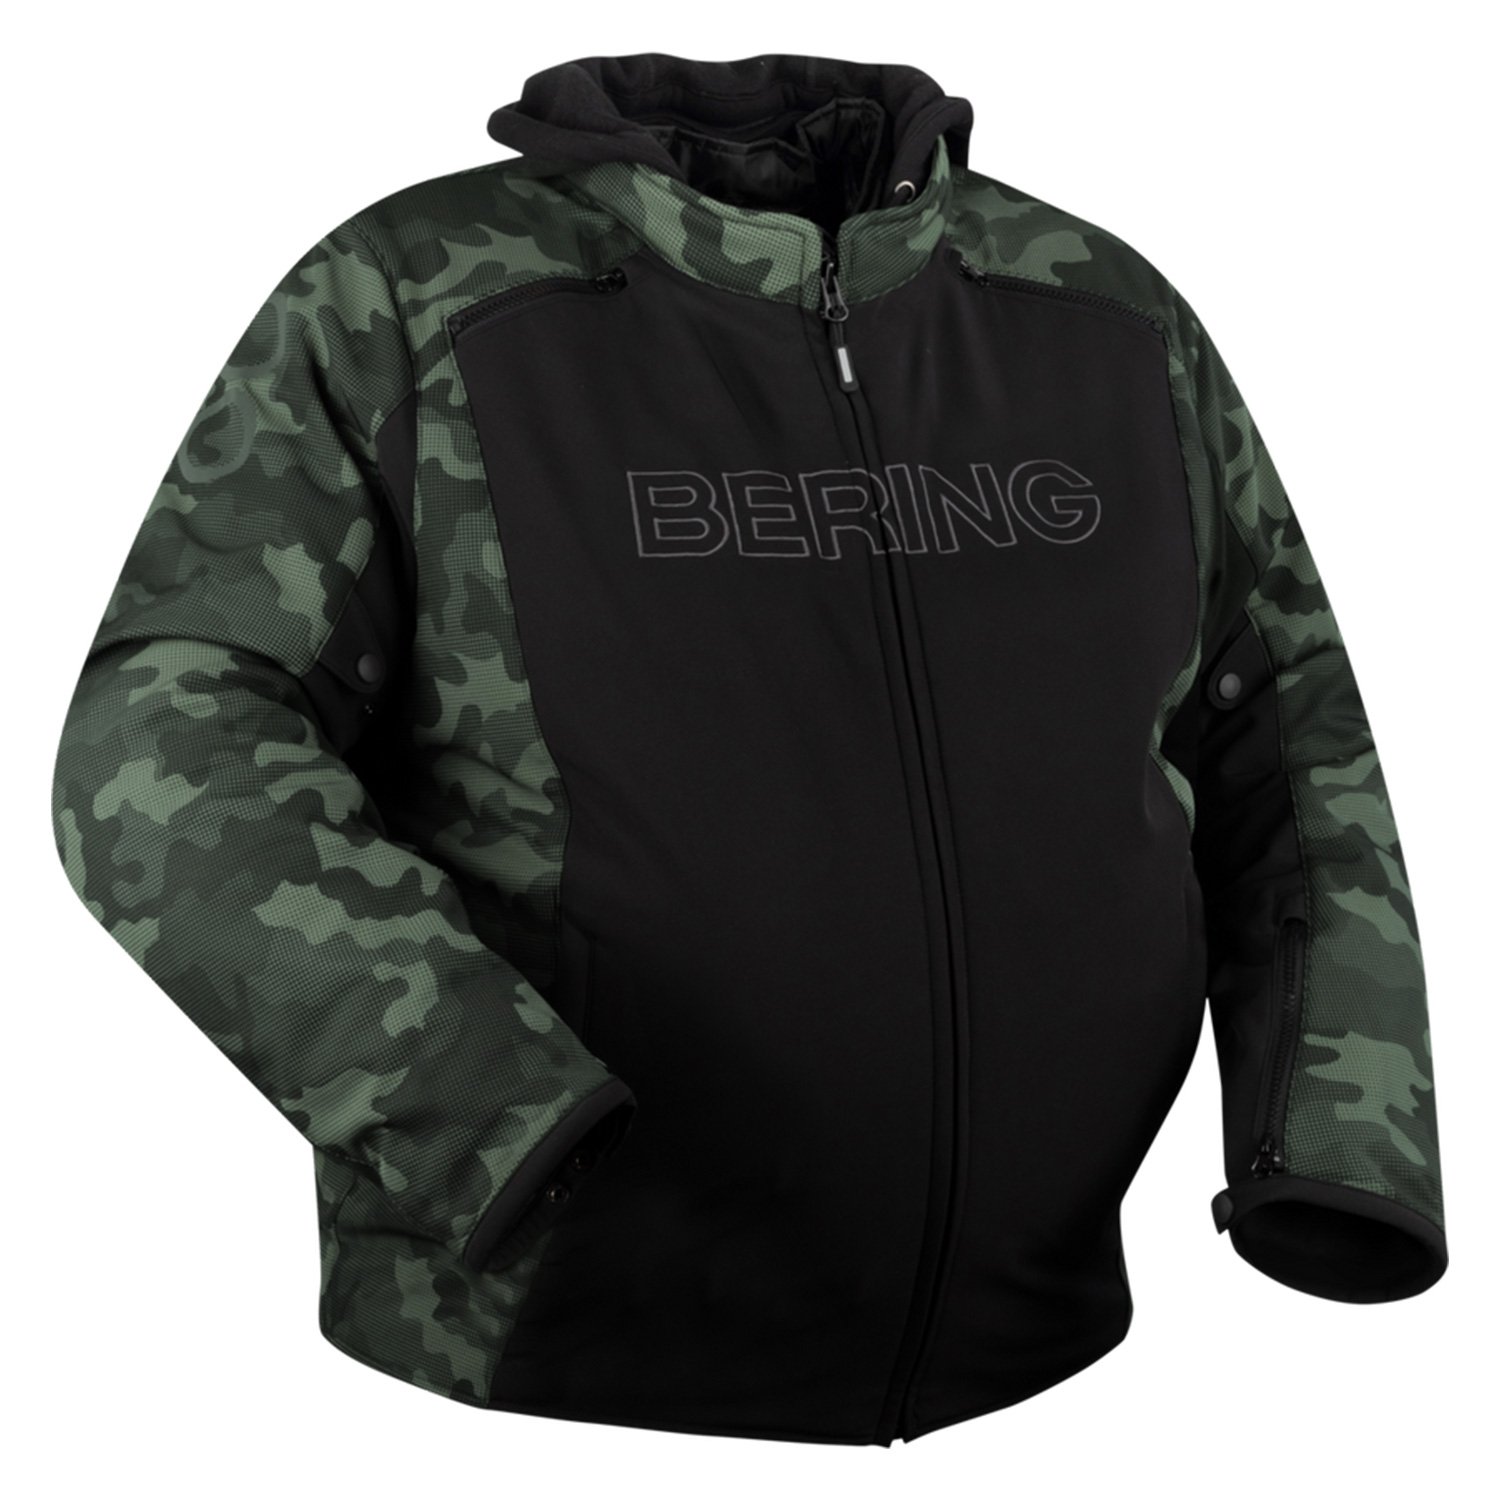 Image of Bering Davis King Size Jacket Black Camo Size 3XL ID 3660815184455